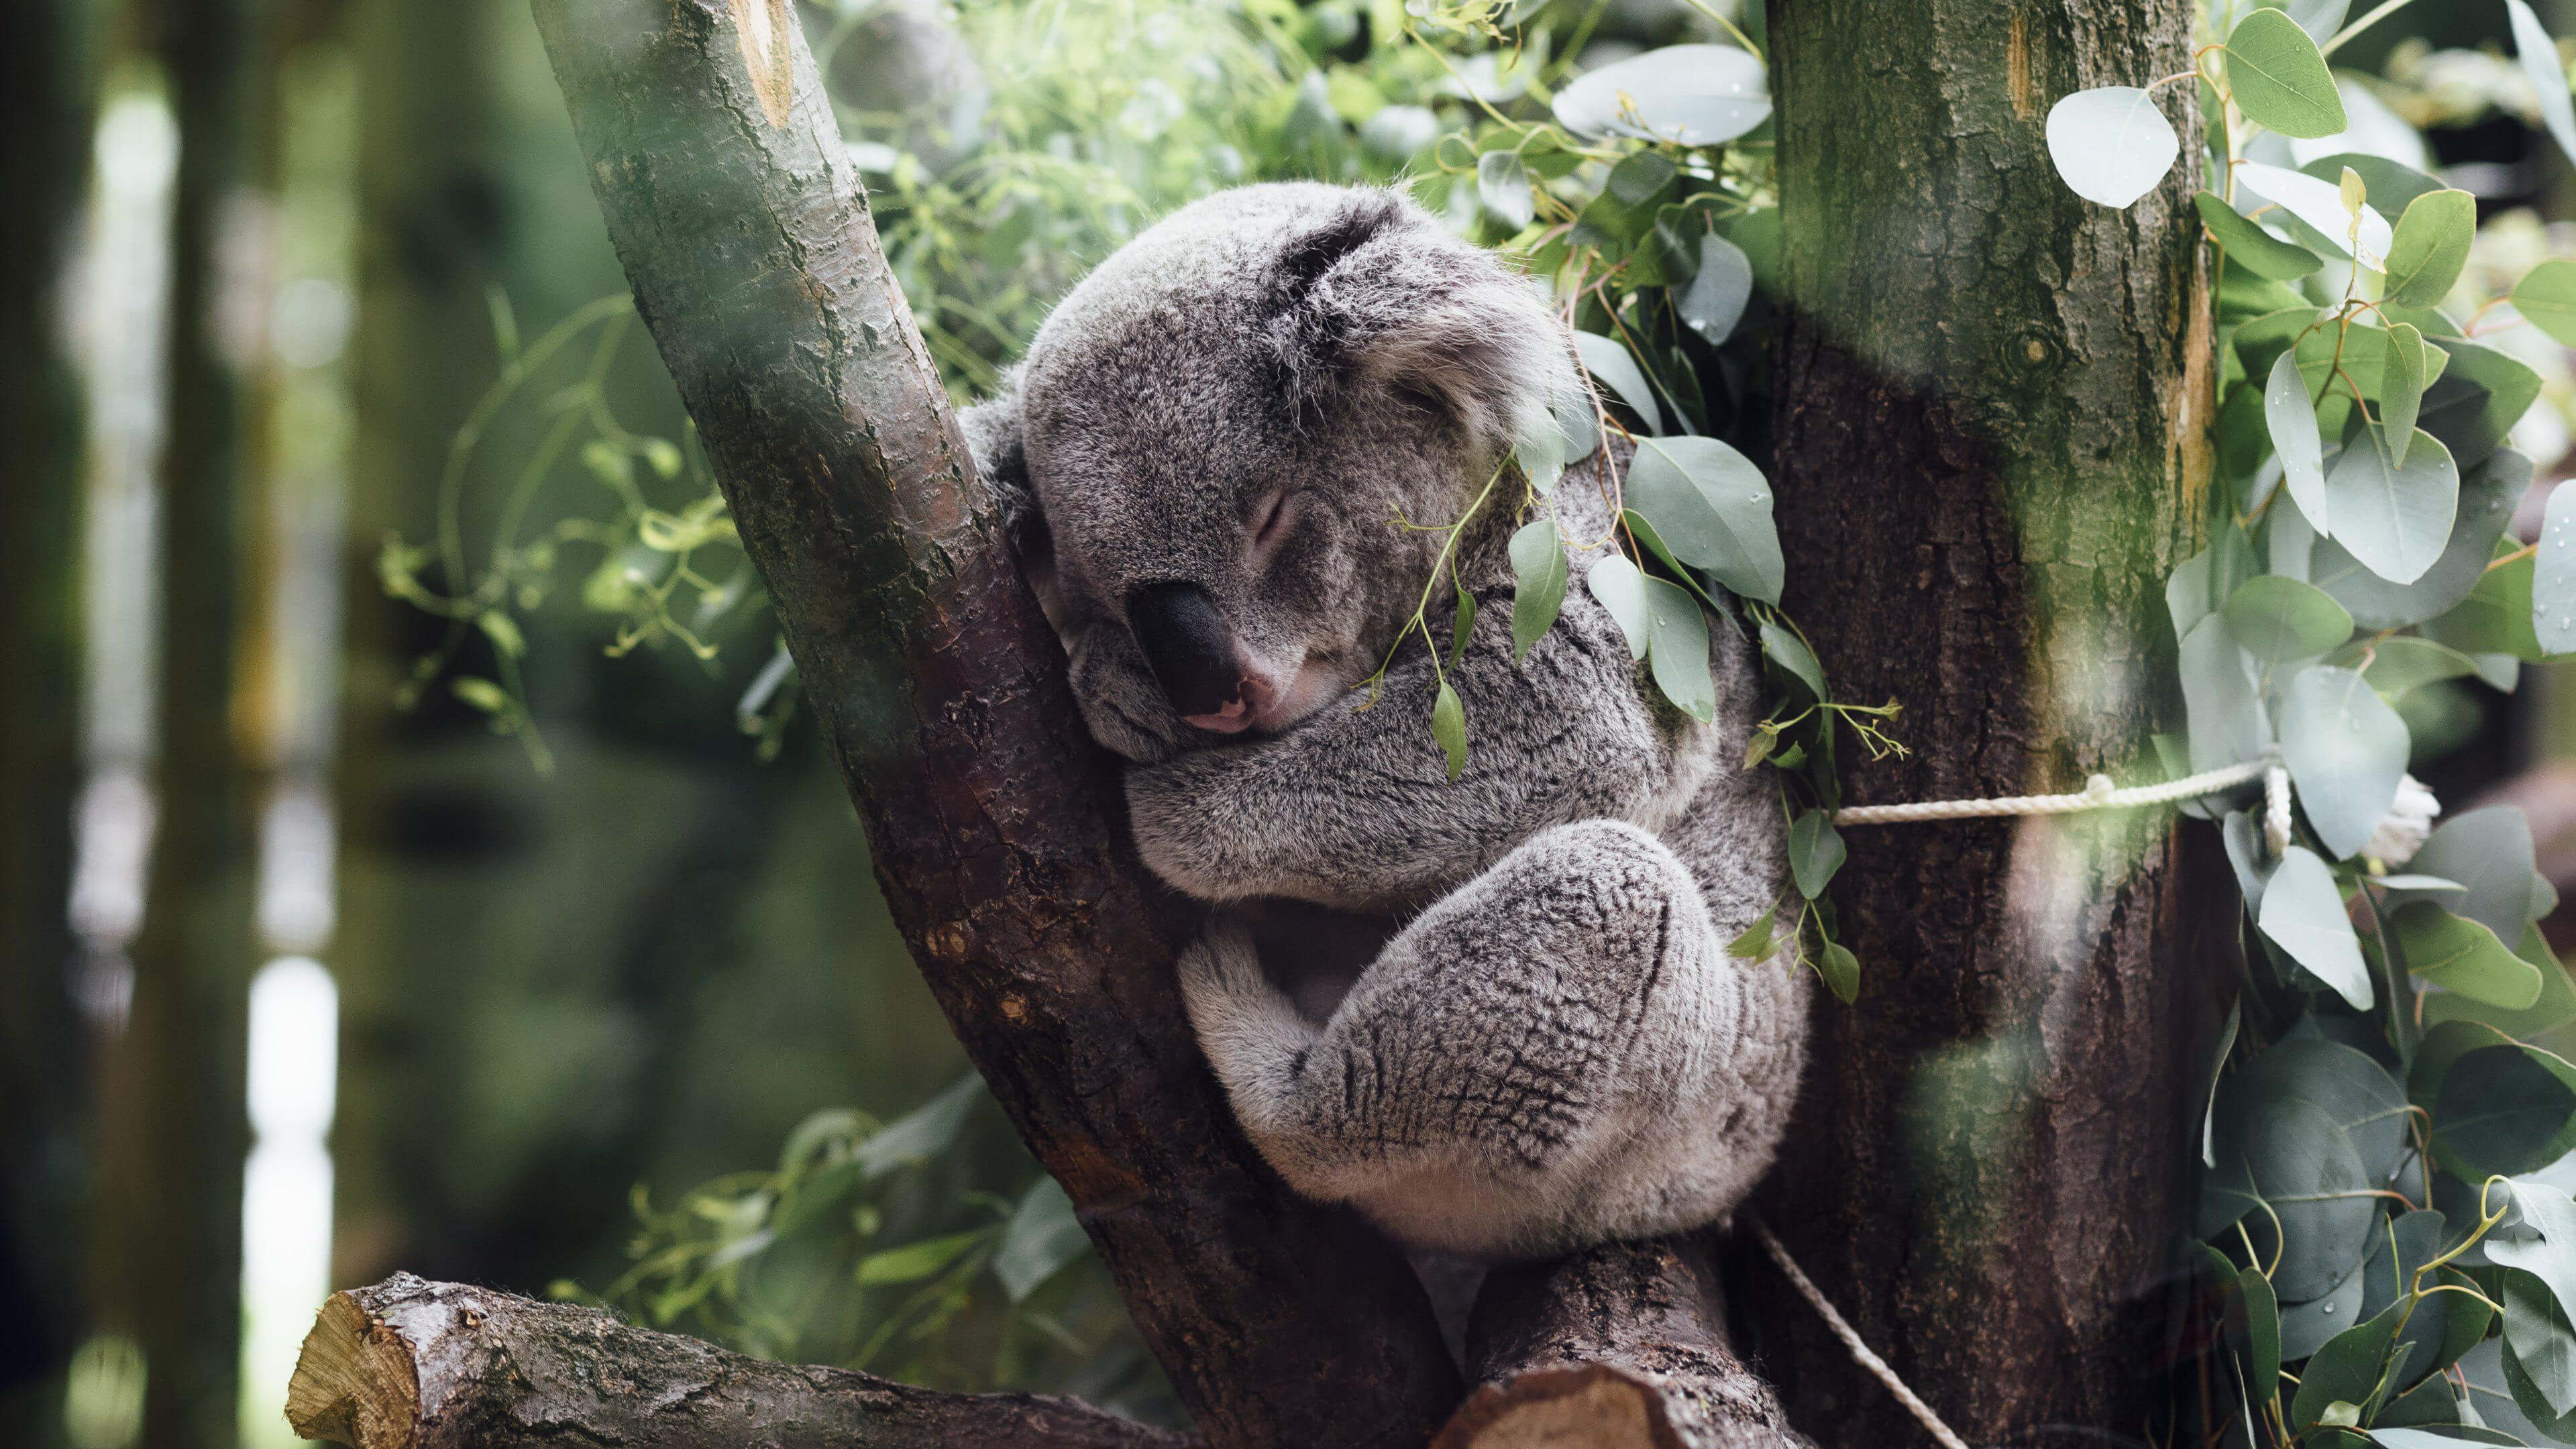 General 3840x2160 nature animals koalas sleeping trees leaves branch baby animals plants